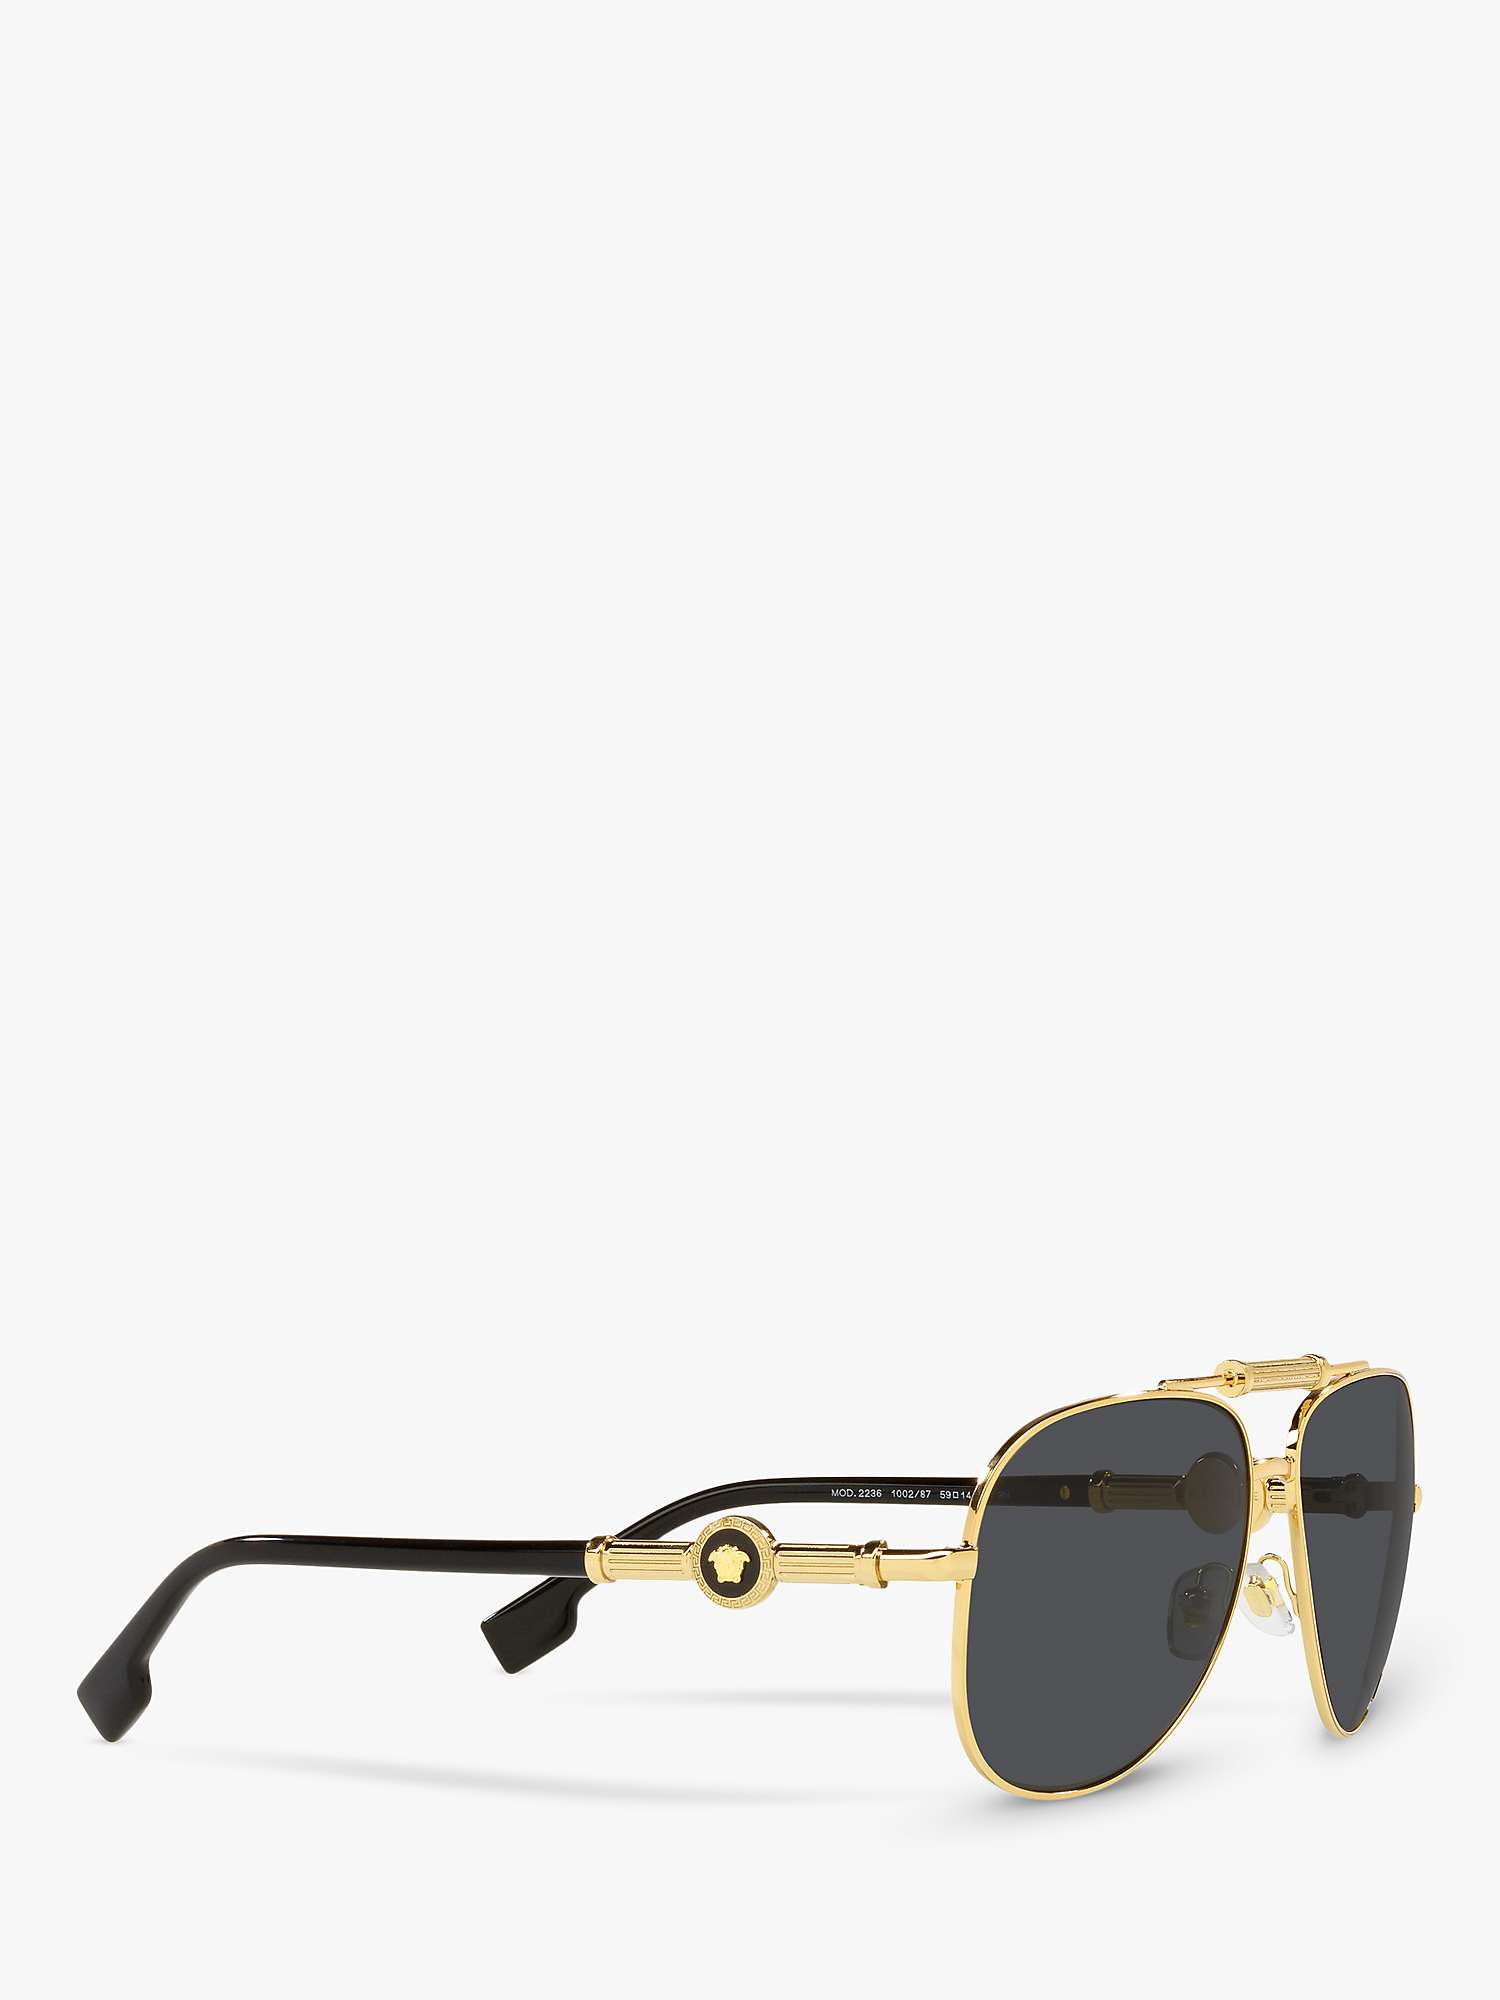 Buy Versace VE2236 Unisex Pilot Sunglasses, Gold/Black Online at johnlewis.com